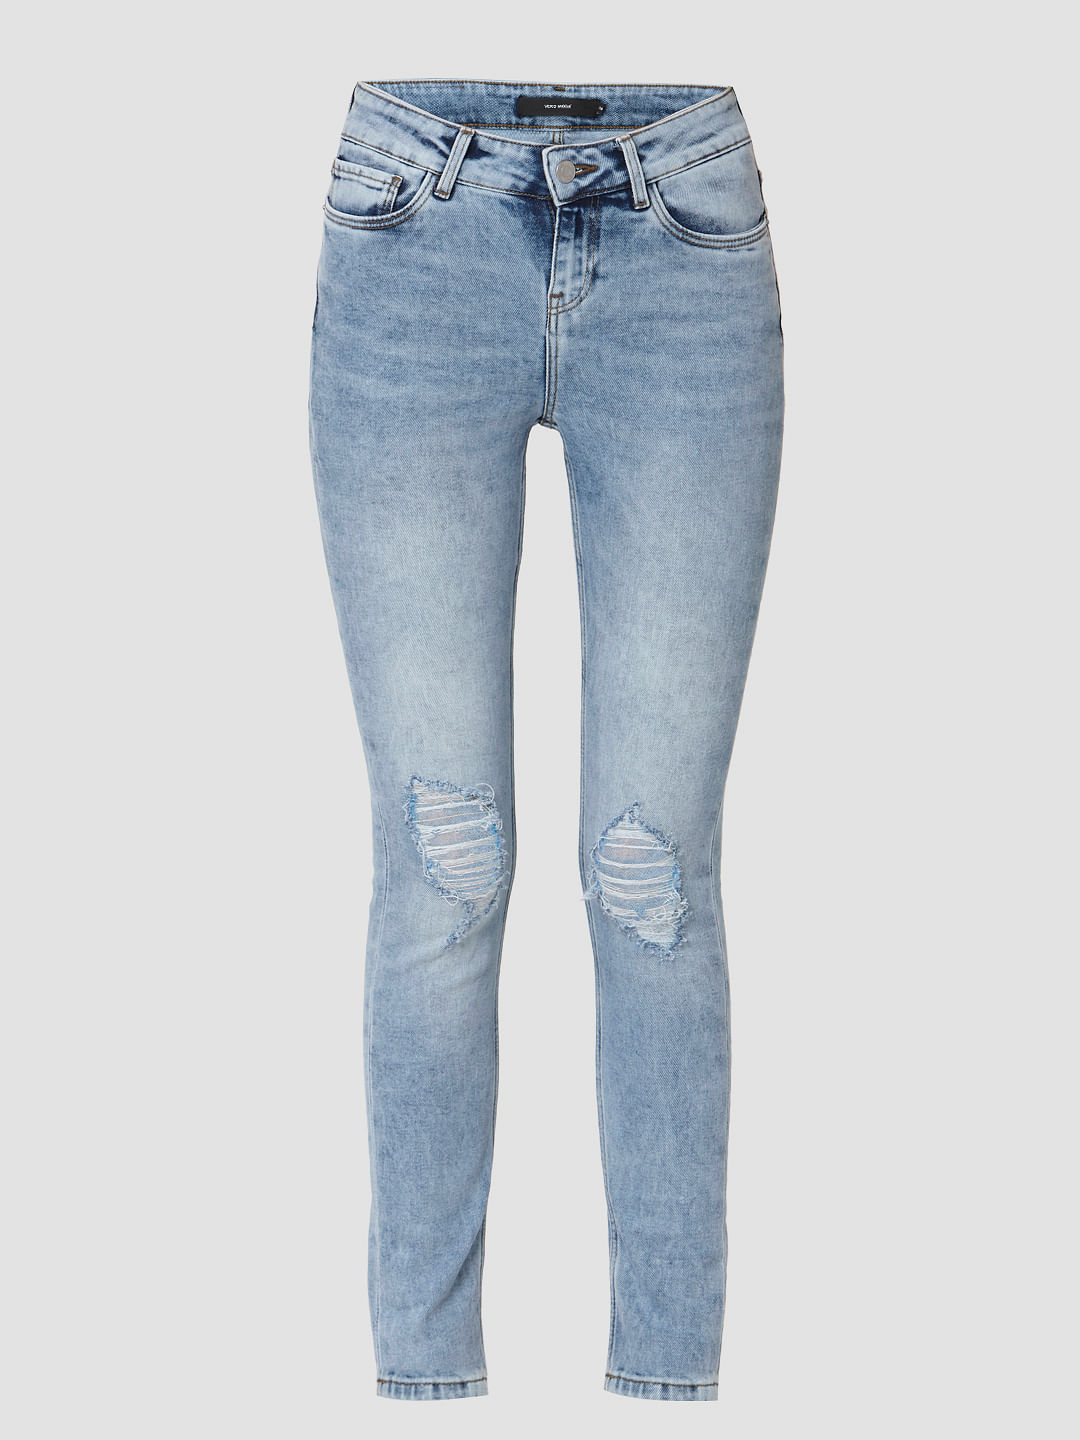 Deal light blue ripped denim jeans - G3-WJJ0790 | G3fashion.com